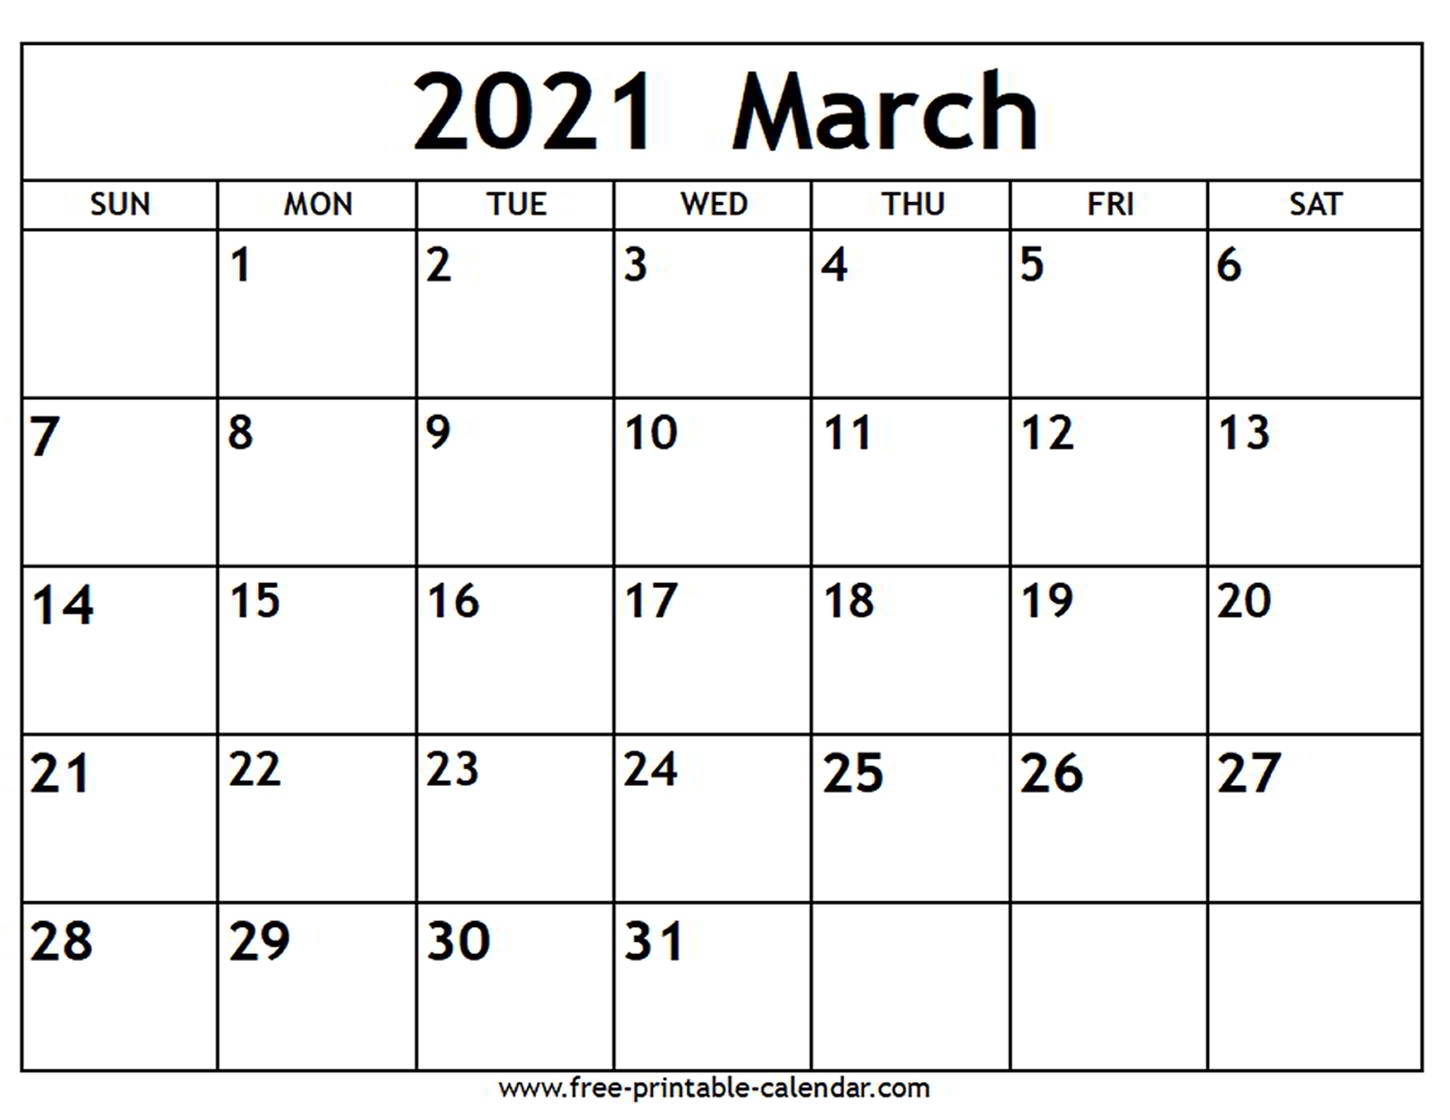 March 2021 Calendar - Free-Printable-Calendar June 2021 Calendar Copy And Paste